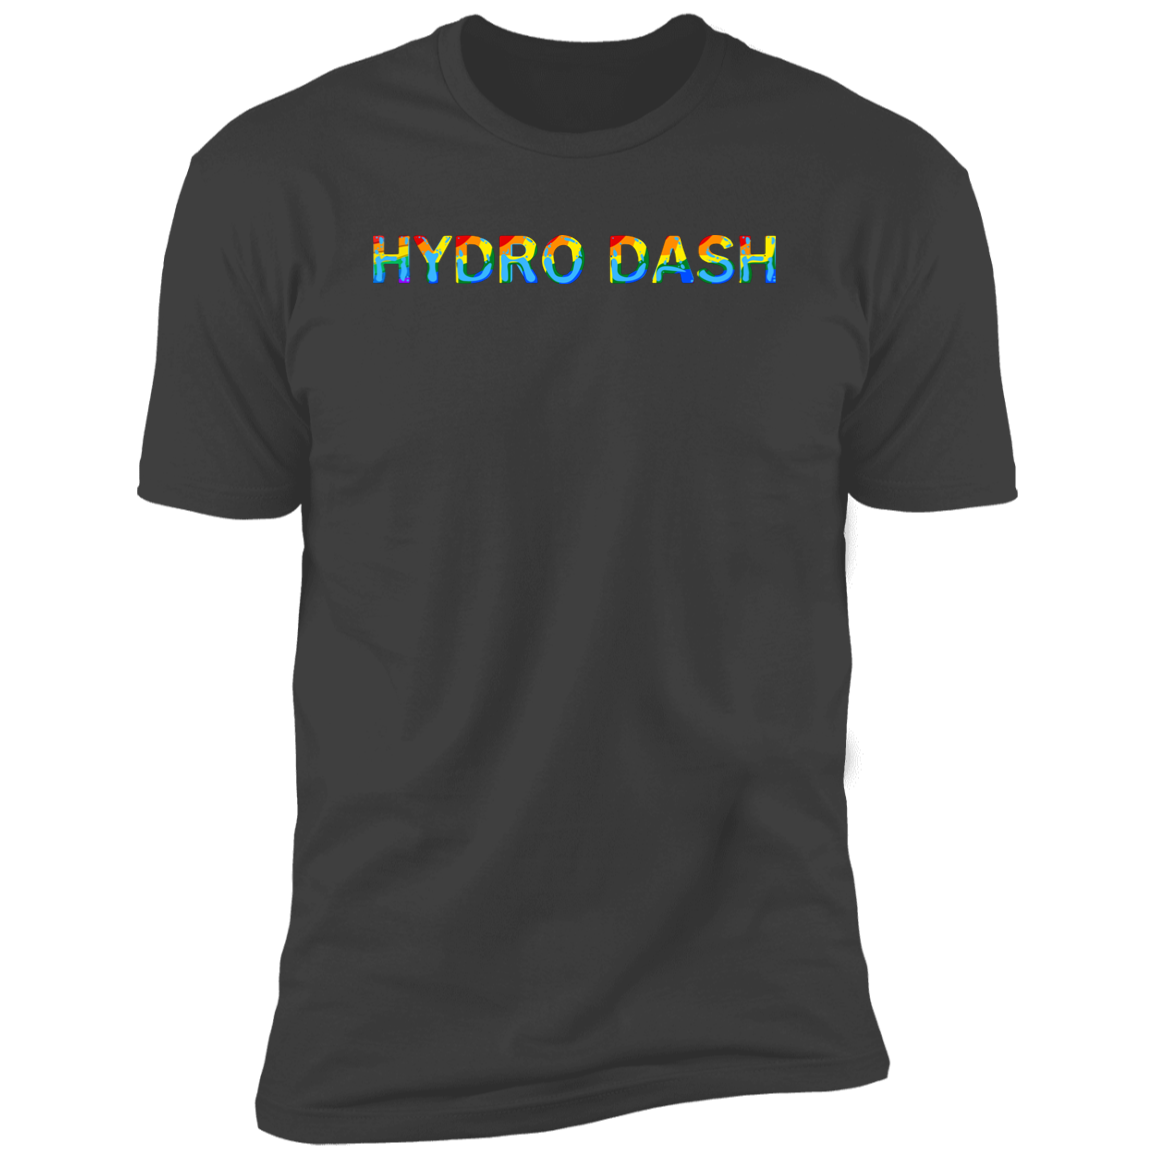  Hydro Dash Pride 2023  t-shirt, dog pride dog Hydro dash shirt for humans, in heavy metal gray